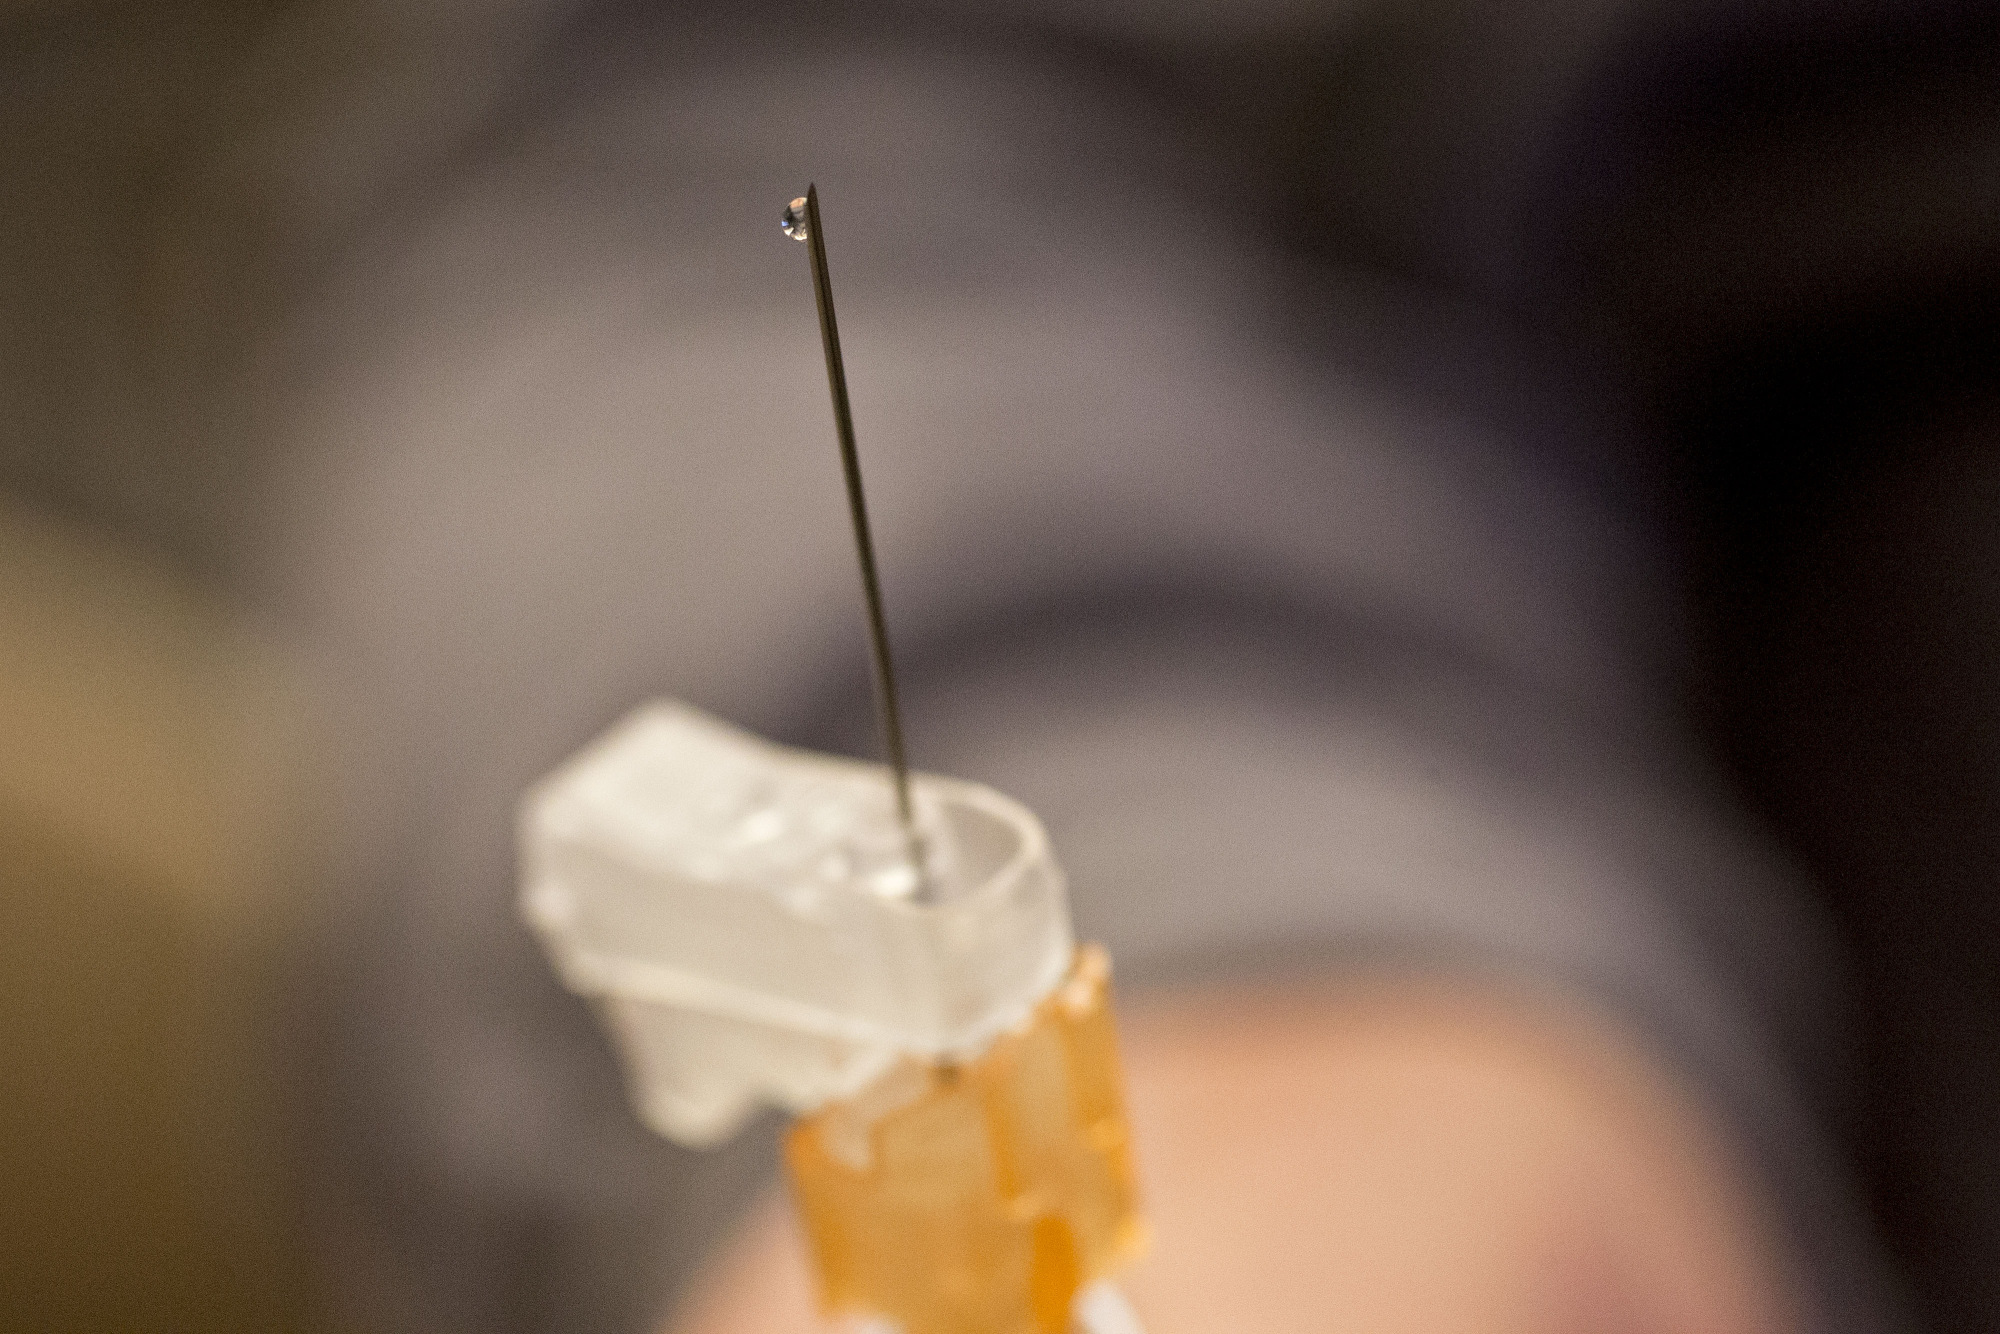 Liquid vaccine flows from a flu shot at a hospital.